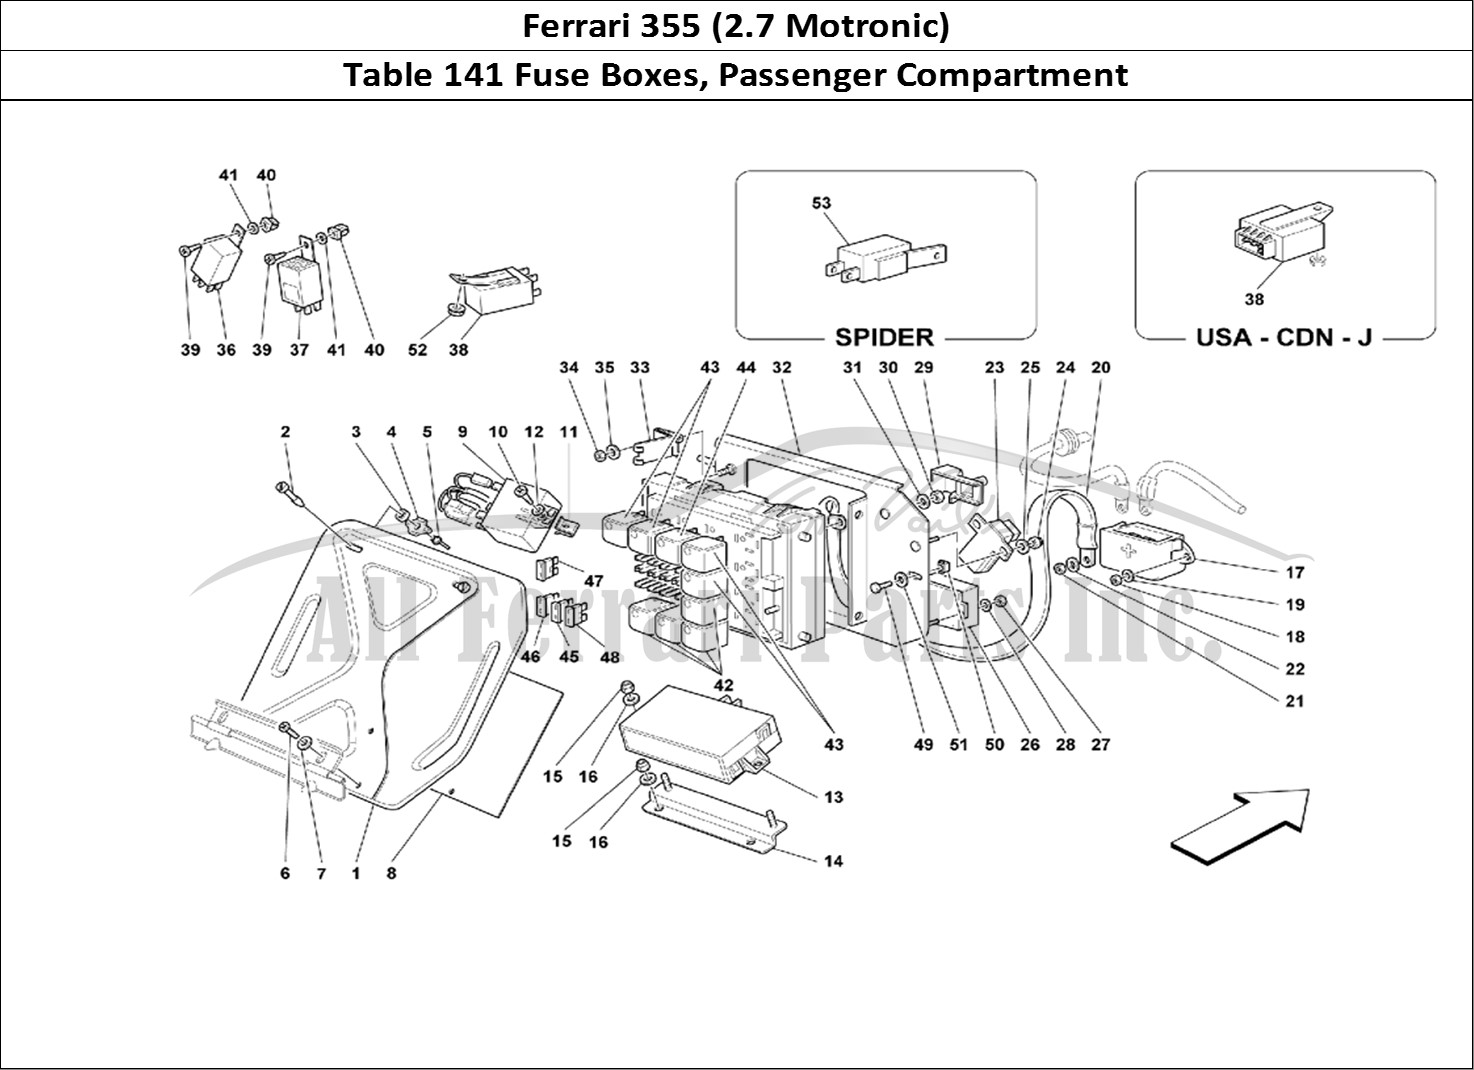 Ferrari Parts Ferrari 355 (2.7 Motronic) Page 141 Electrical Boards - Passe